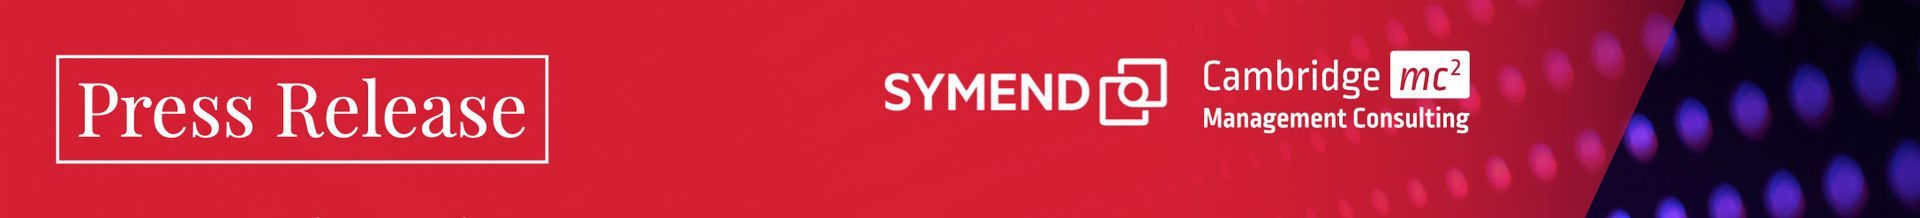 Press Release - Symend